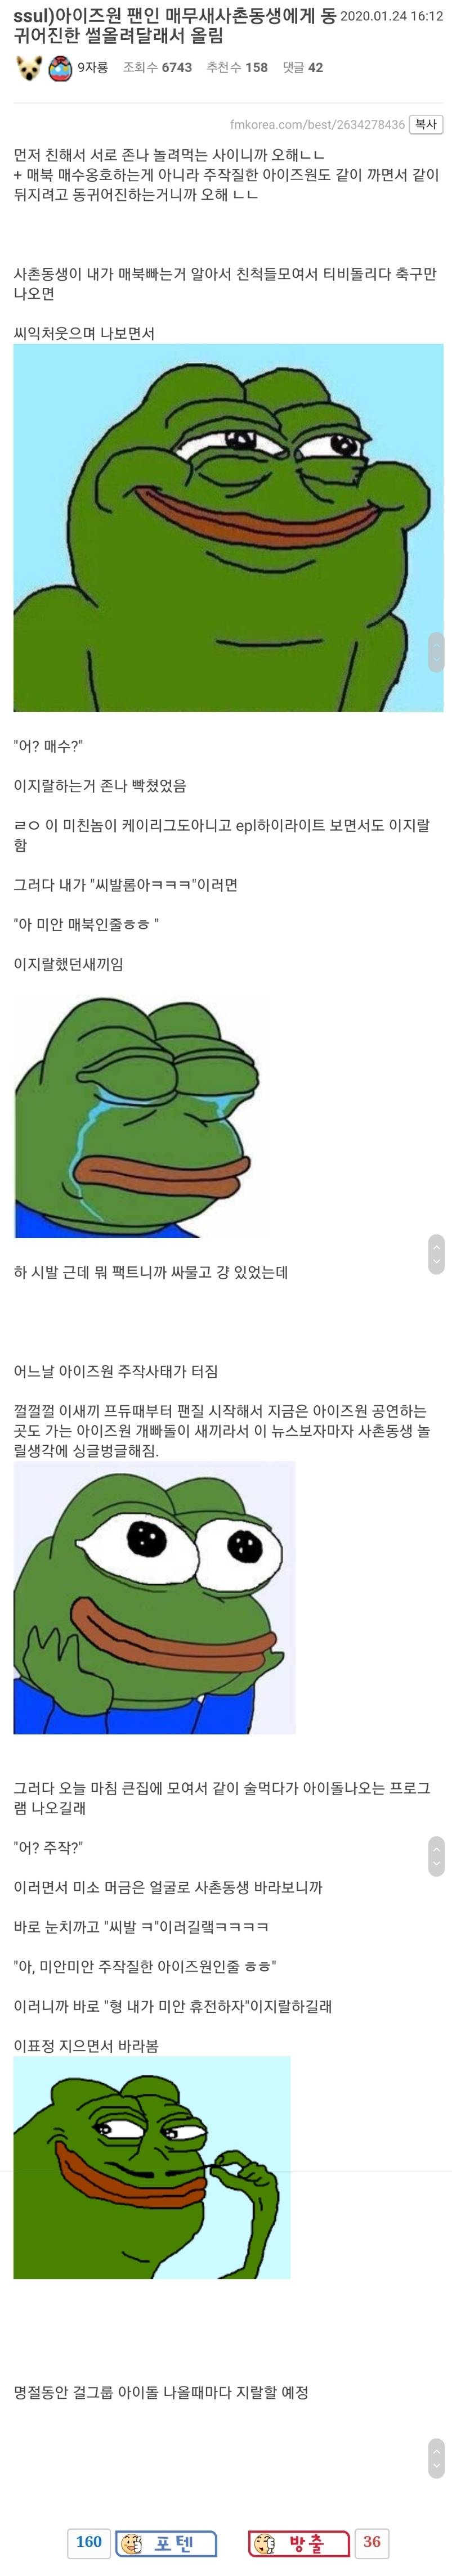 ssul)아이즈원 팬인 매무새사촌동생에게 동귀어진한 썰올려달래서 올림.jpg | 인스티즈